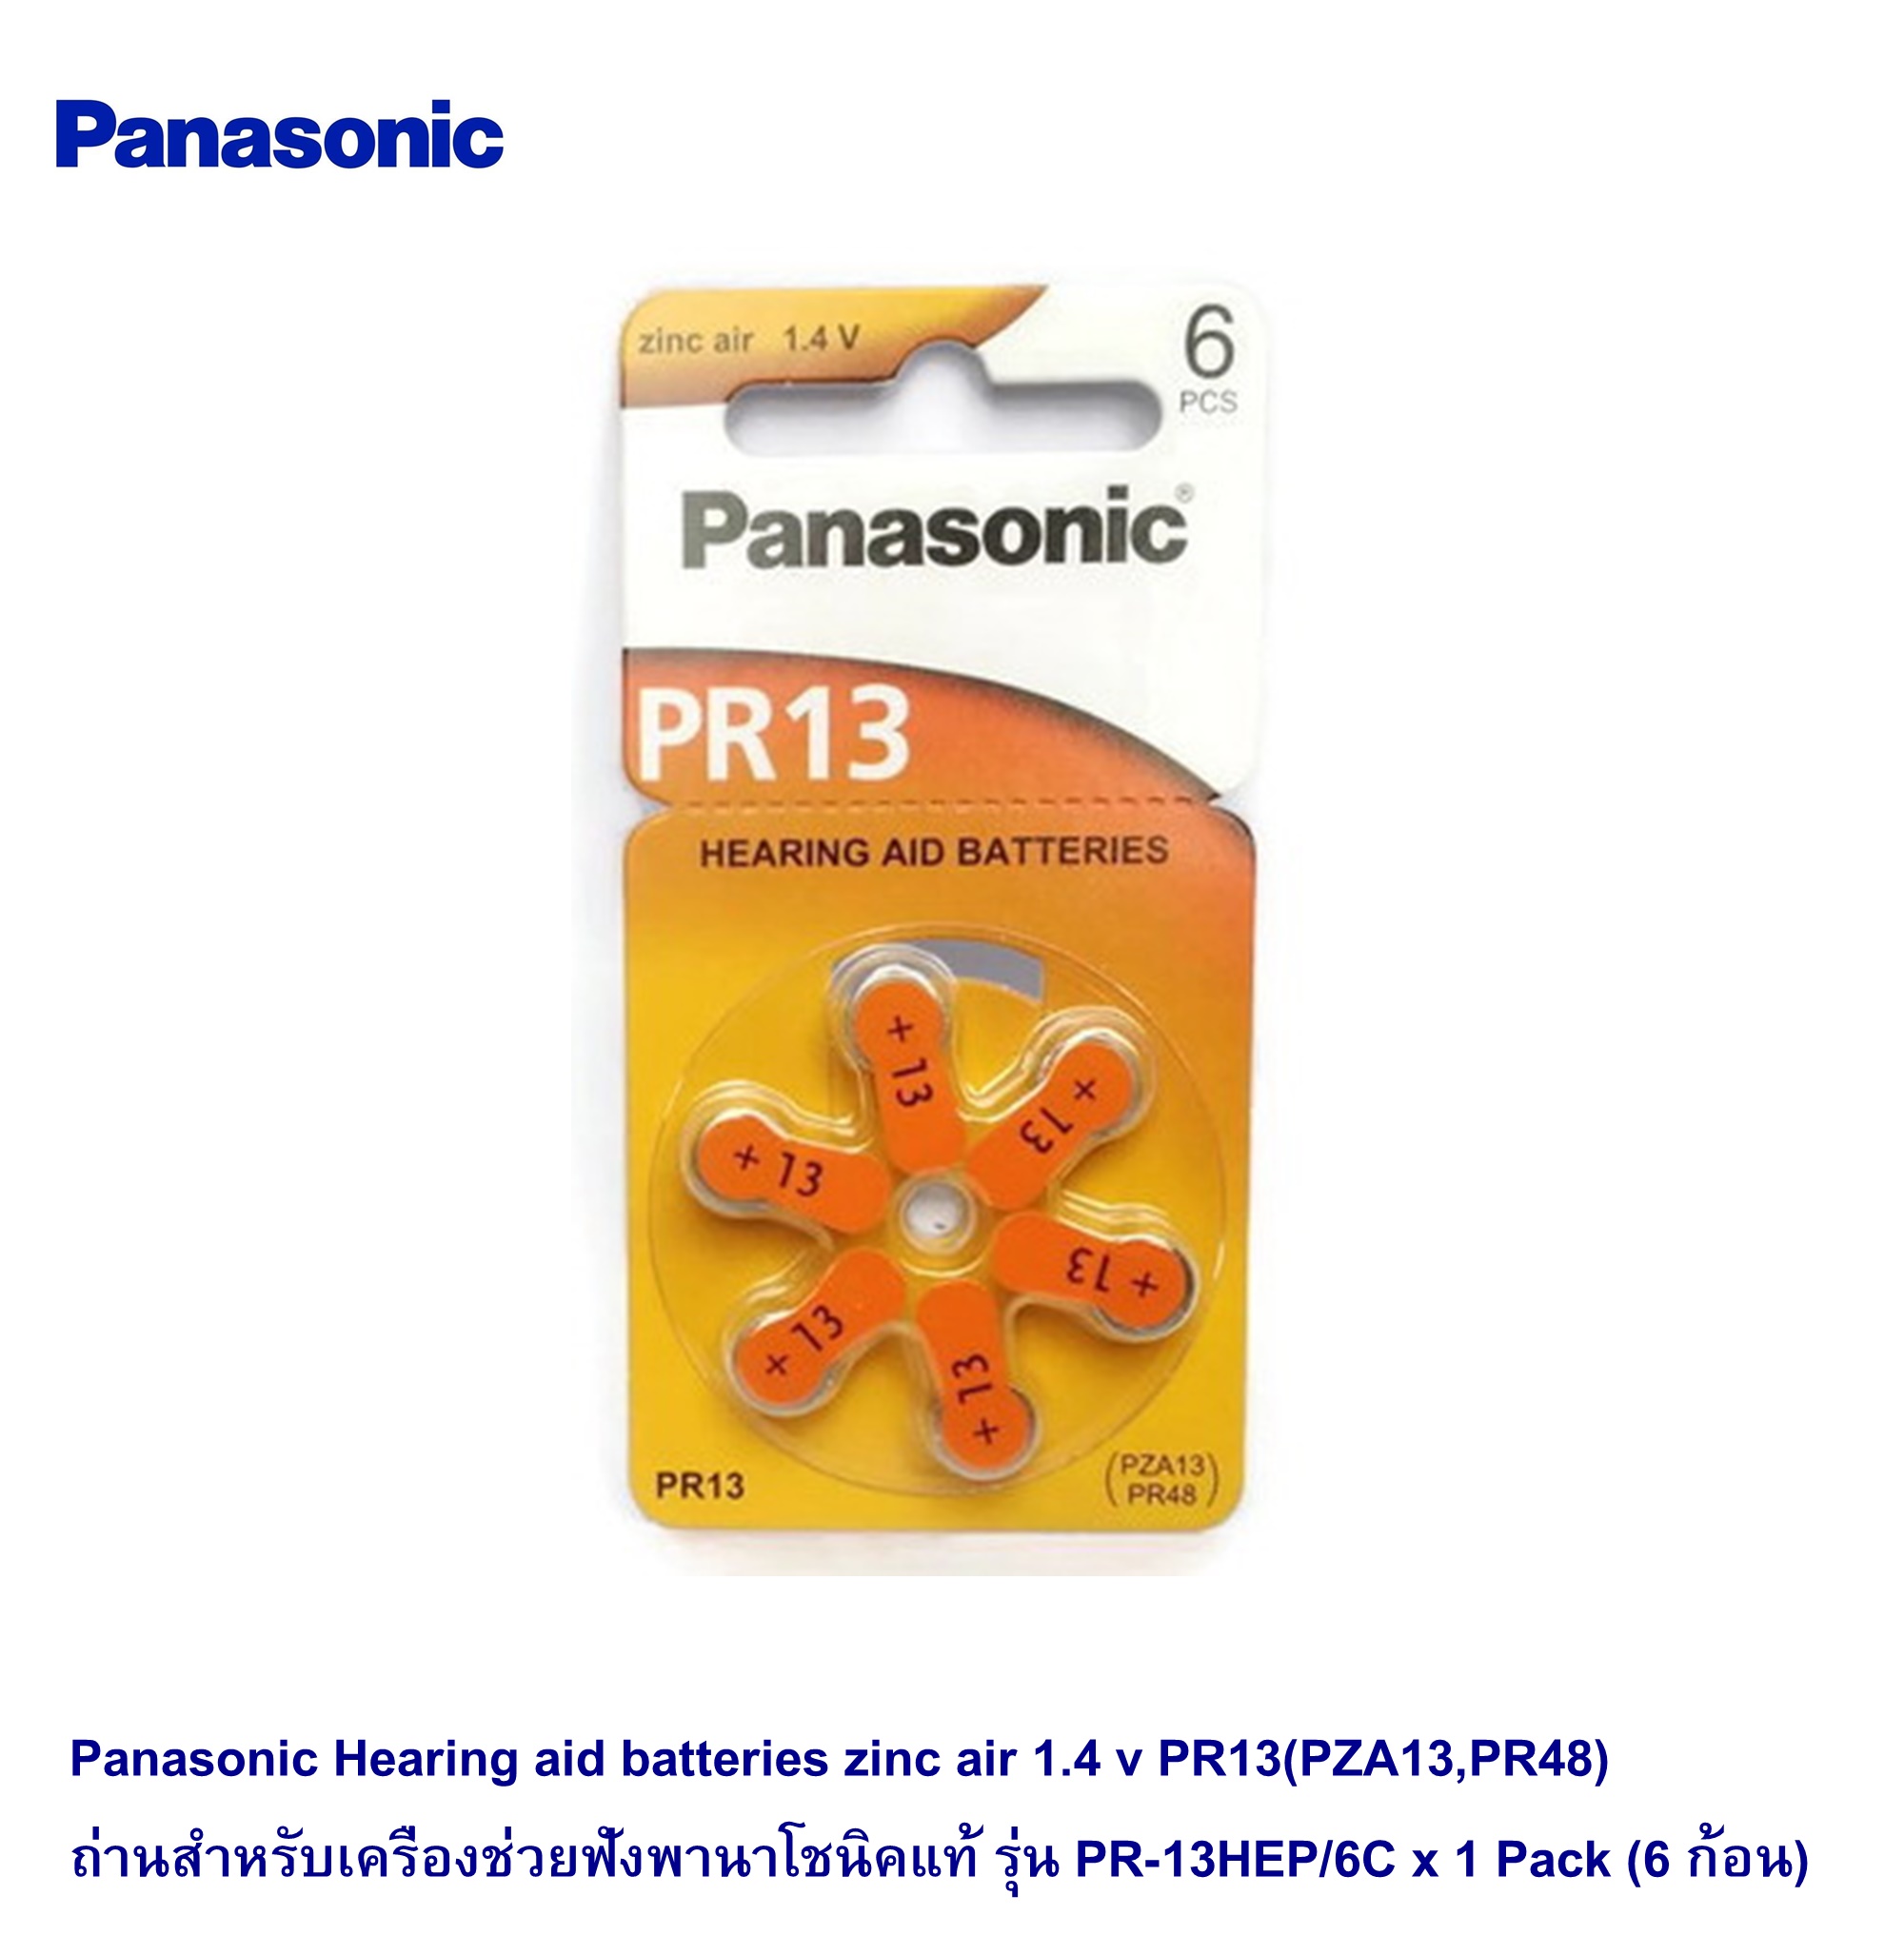 Panasonic Hearing aid batteries zinc air 1.4 v PR13(PZA13,PR48) ถ่านสำหรับเครื่องช่วยฟังพานาโชนิคแท้ รุ่น PR-13HEP/6C x 1 Pack (6 ก้อน)